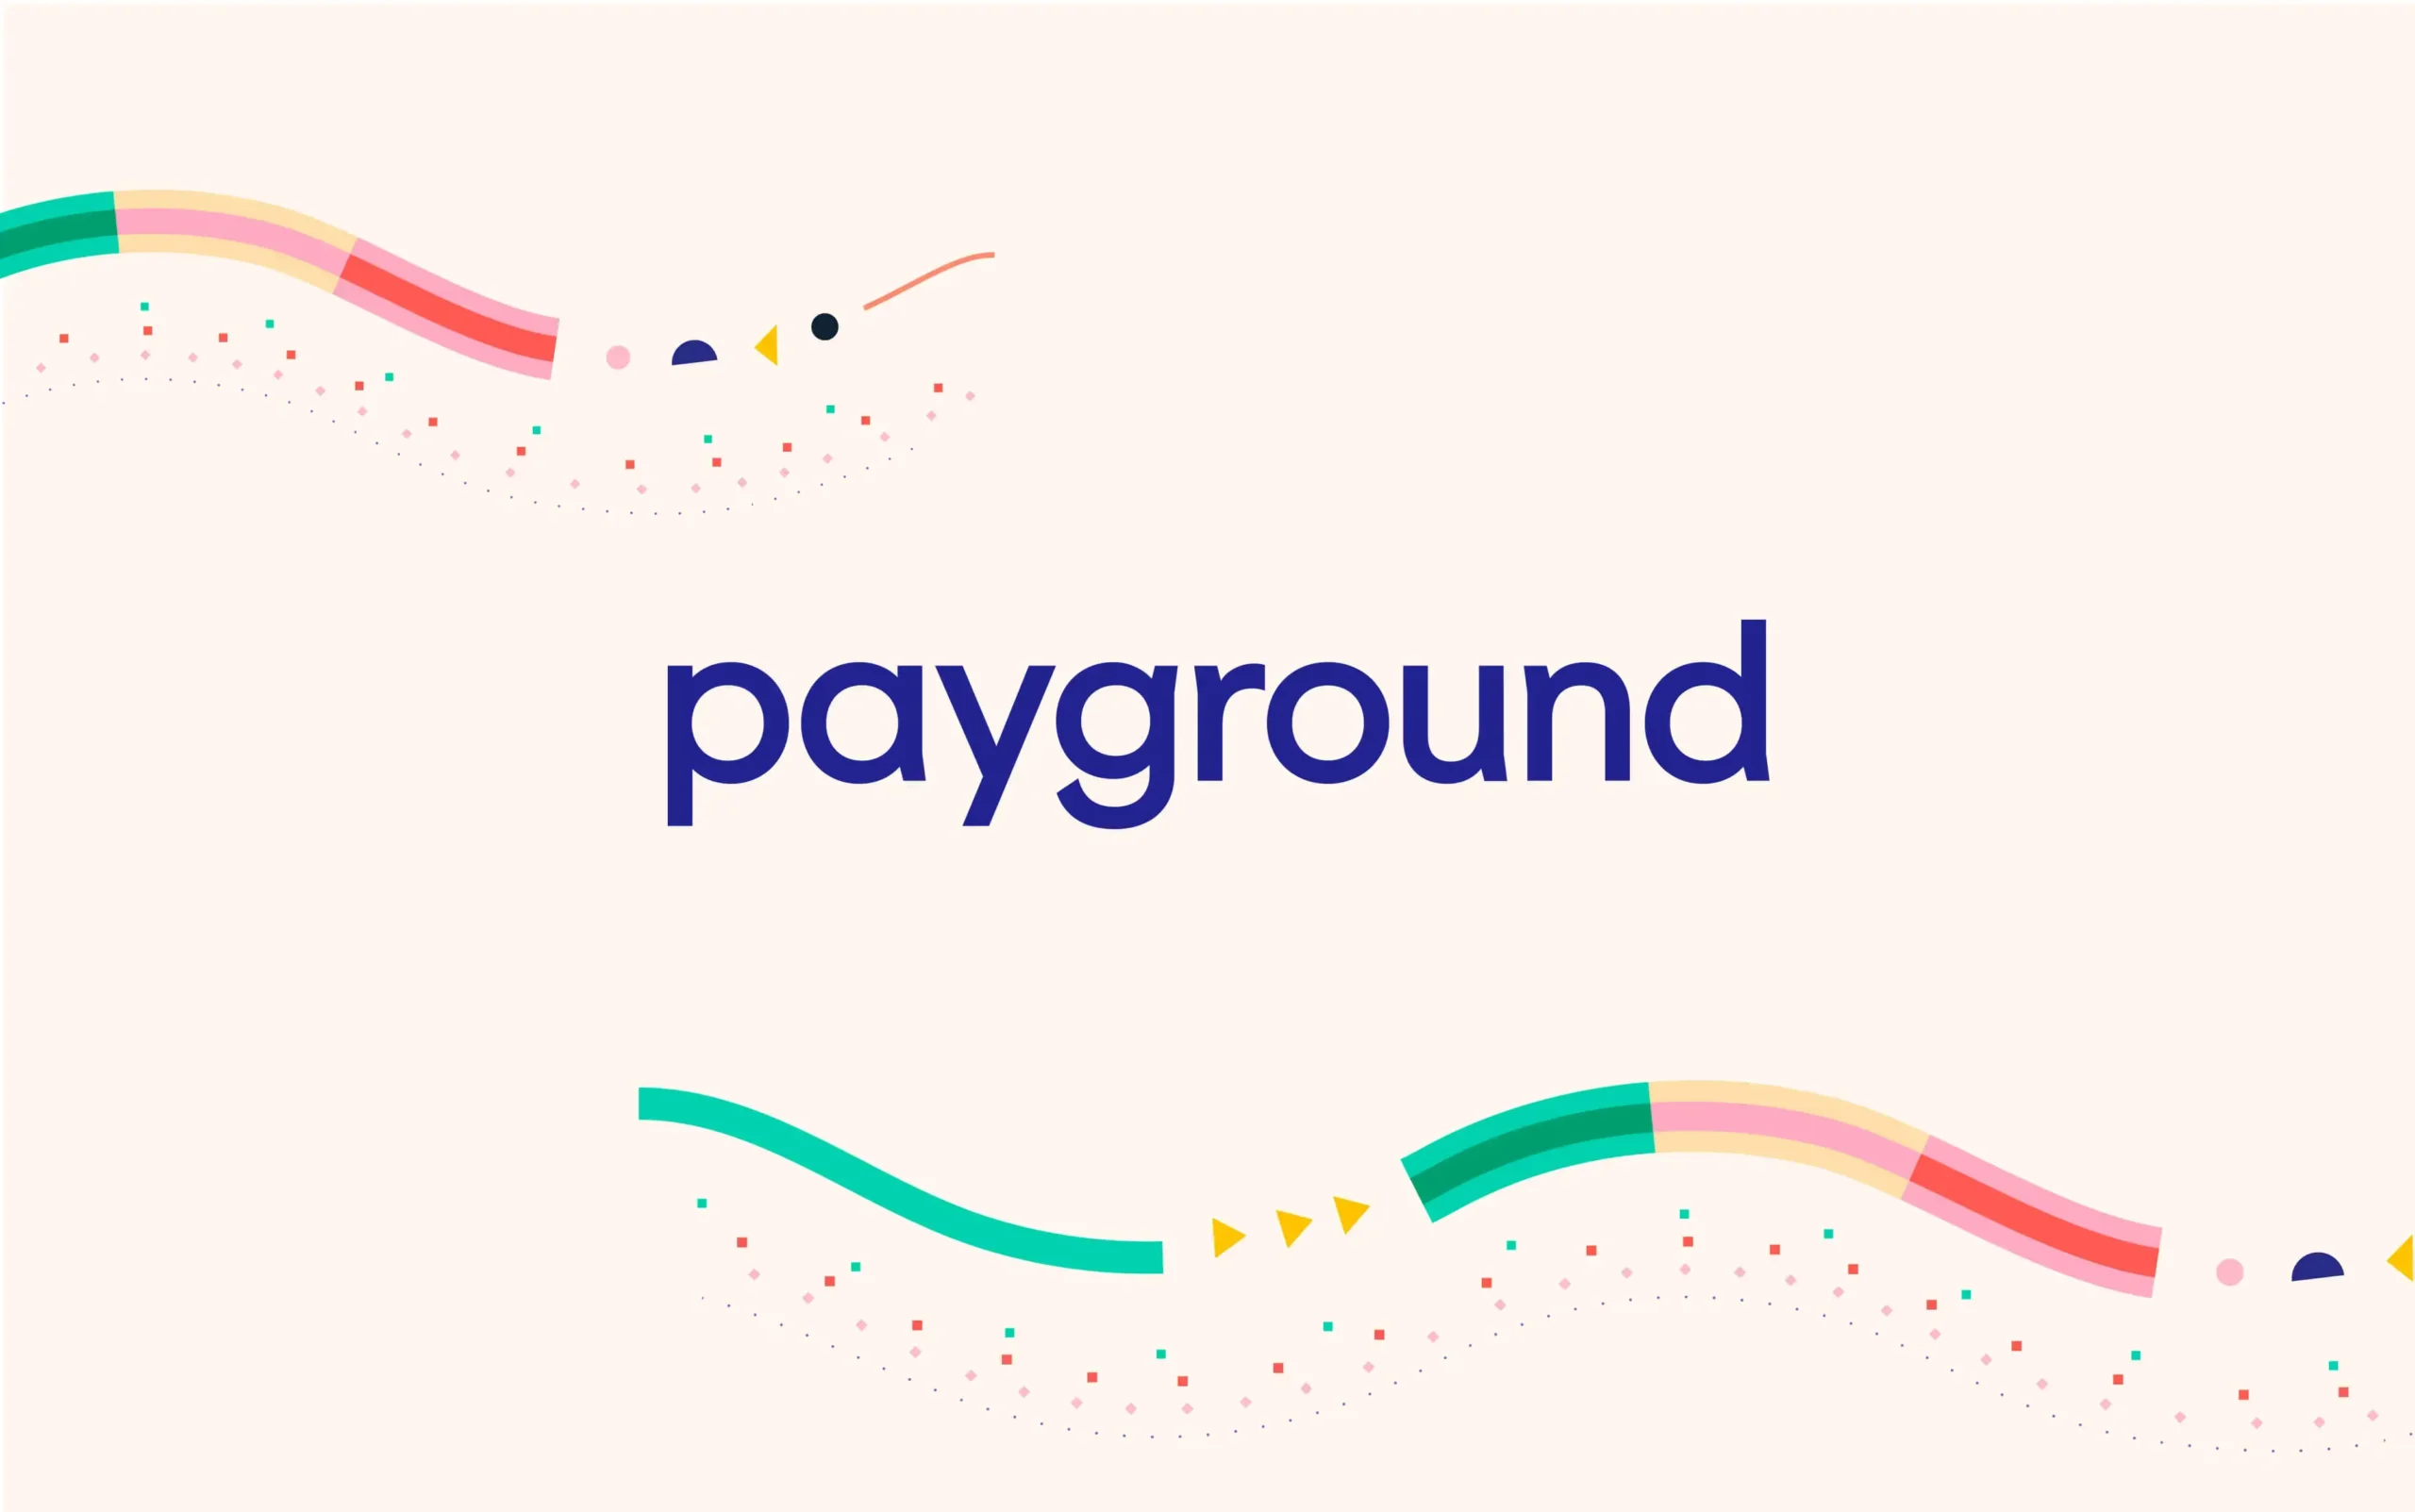 Payground, branding agency